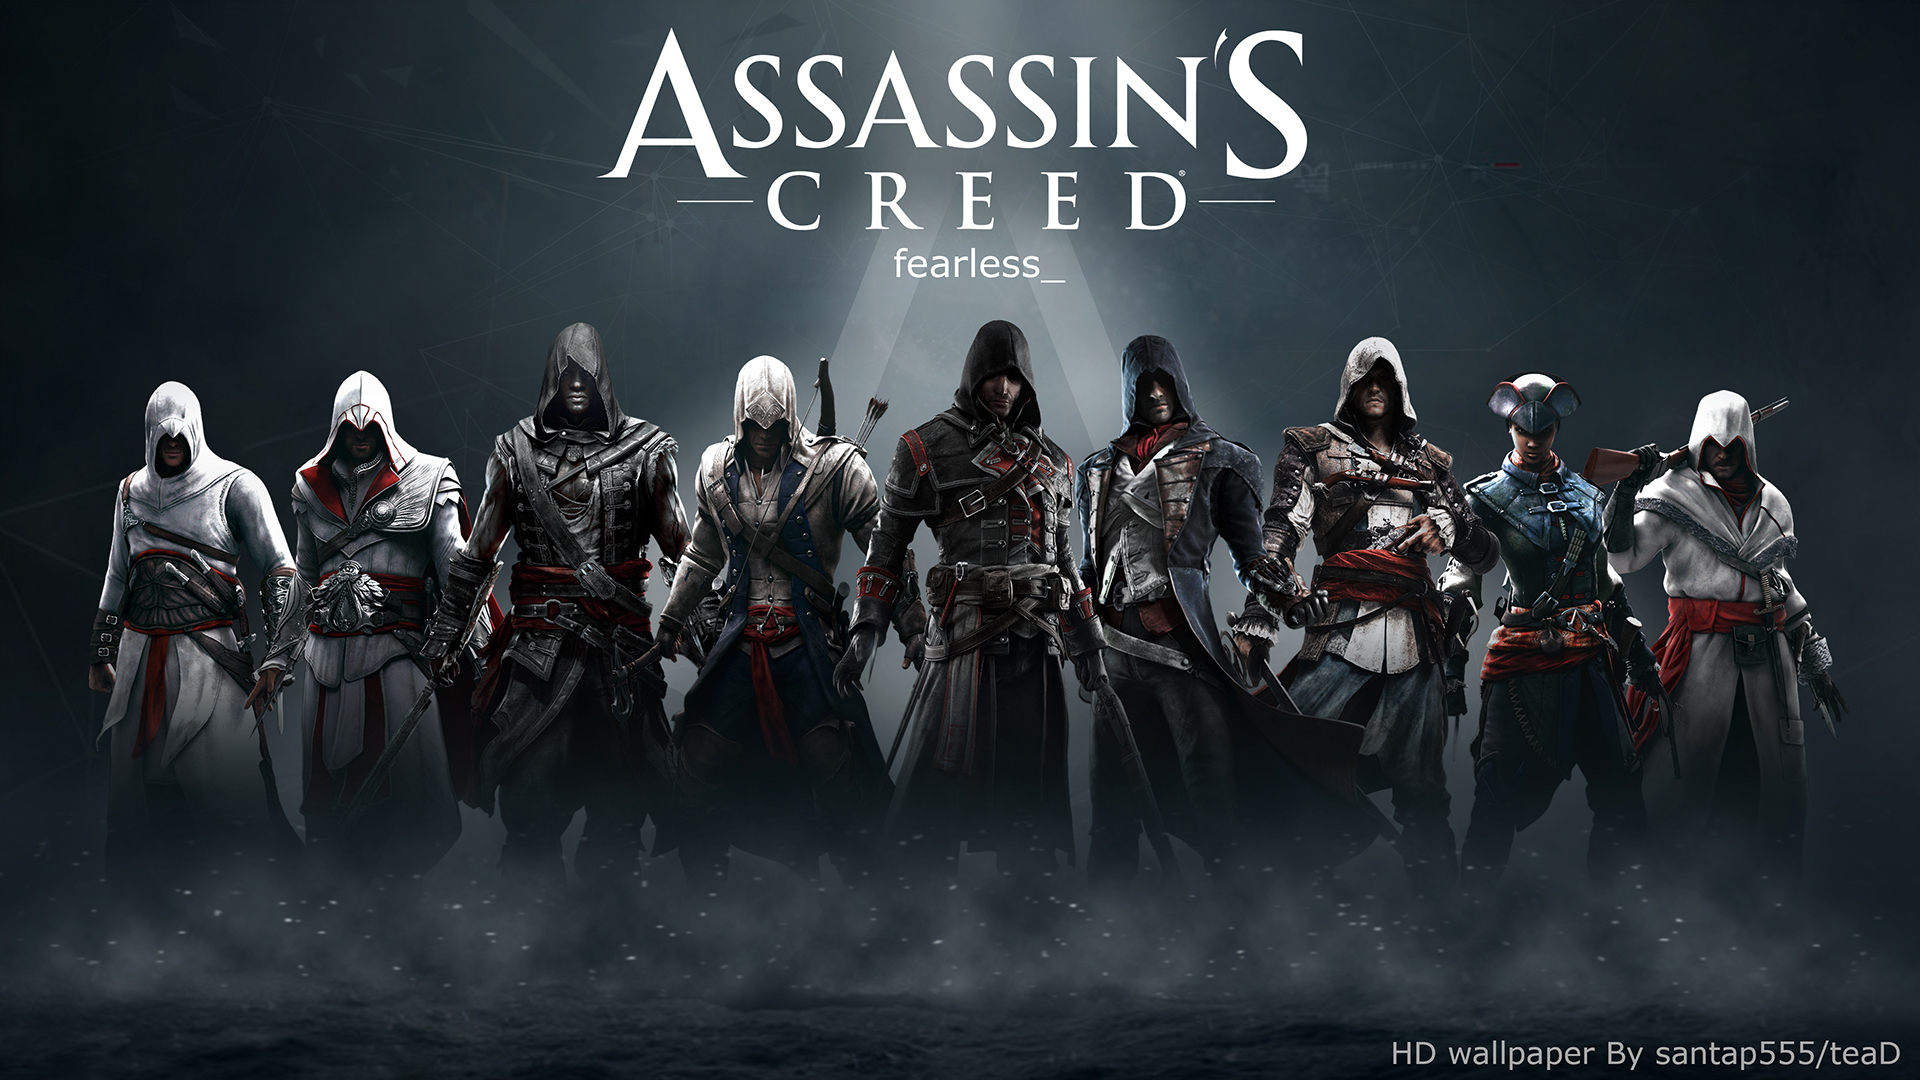 Assassin S Creed HD Wallpaper By Tead Santap555